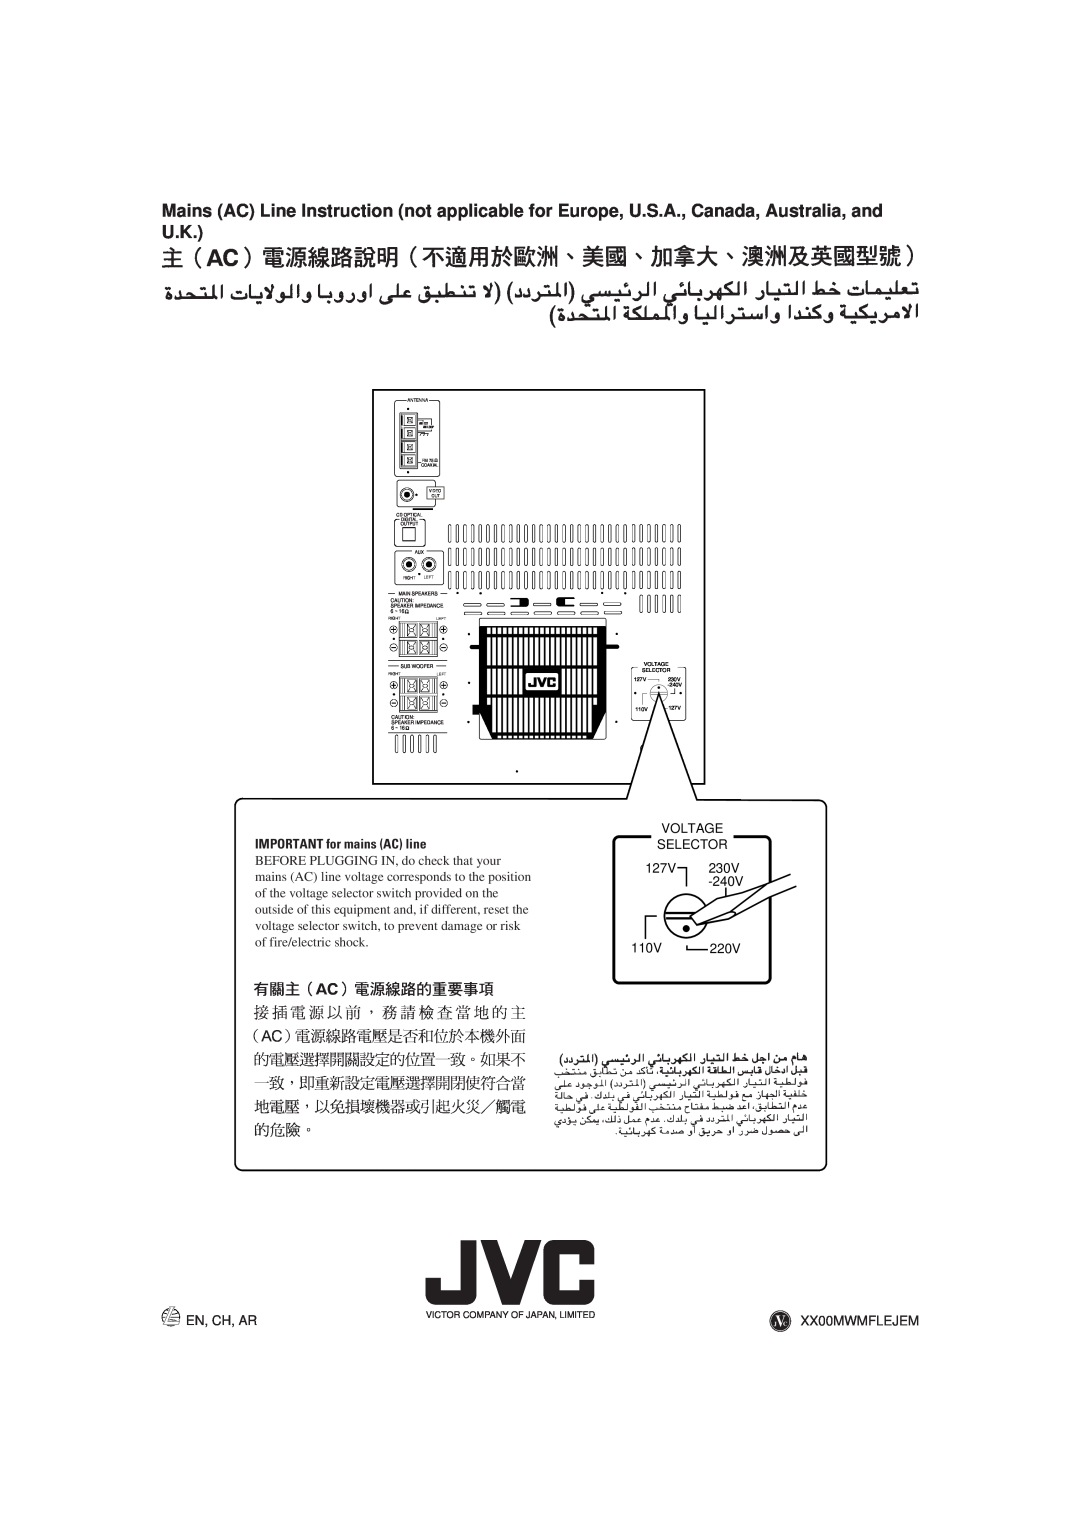 JVC CA-MXJ770V, CA-MXJ880V manual IMPORTANT for mains AC line, Voltage Selector, En, Ch, Ar, JVC XX00MWMFLEJEM 